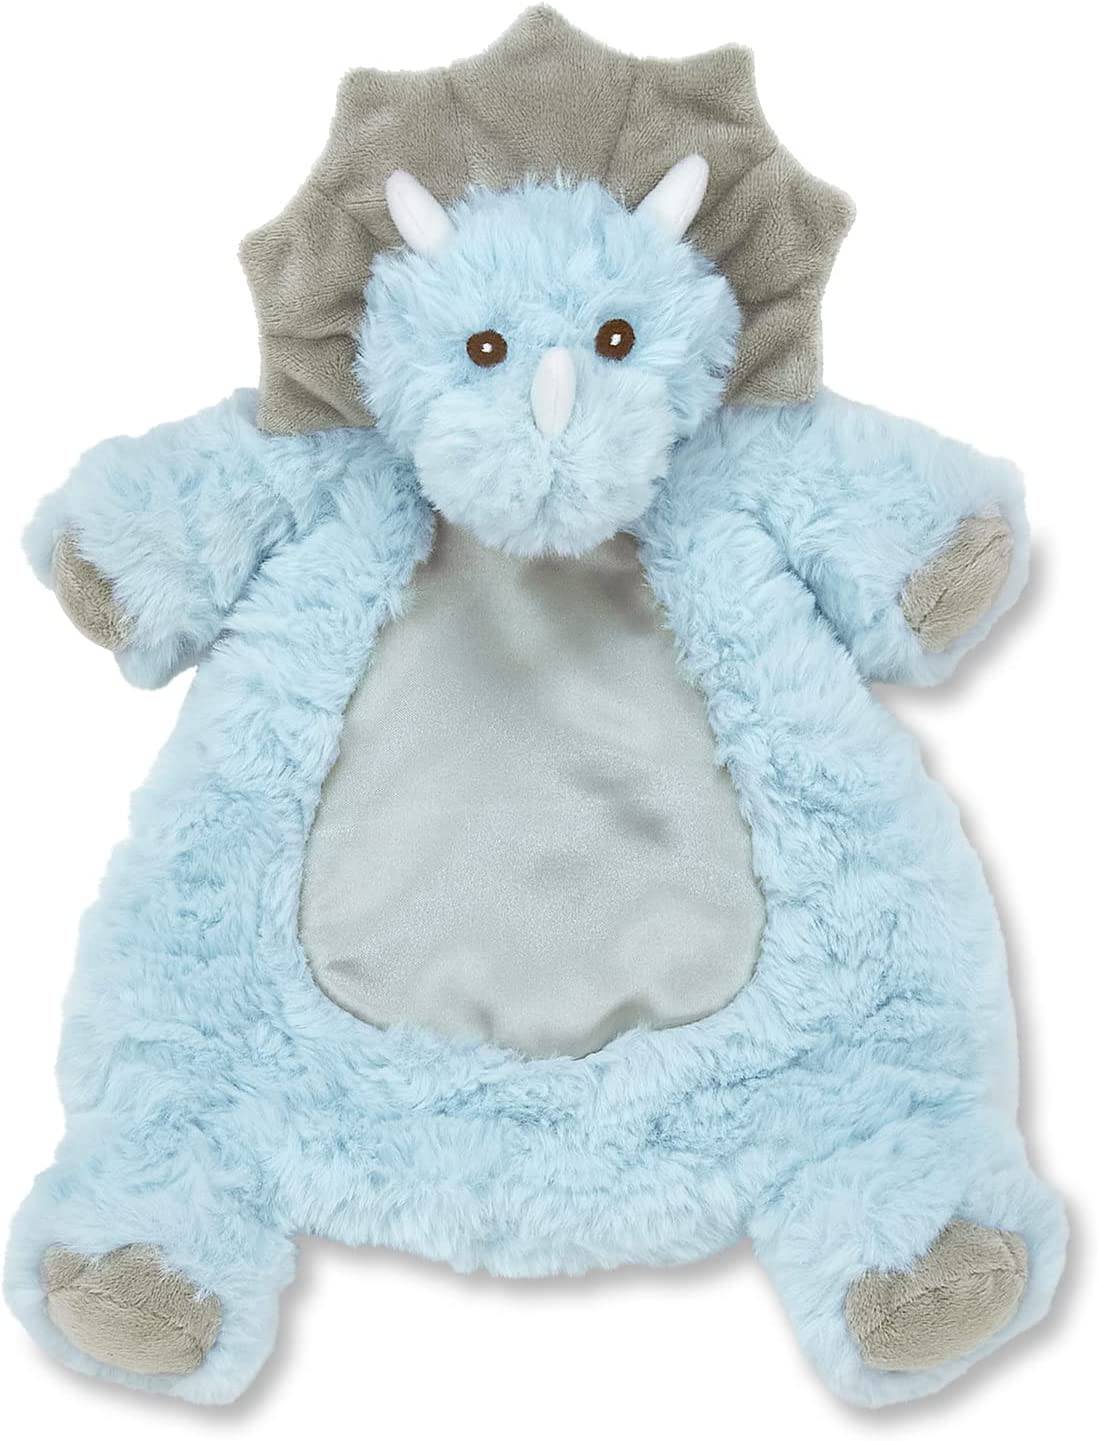 Bearington Lil' Tracer Small Dinosaur Stuffed Animal Lovey Security Blanket - Findlay Rowe Designs